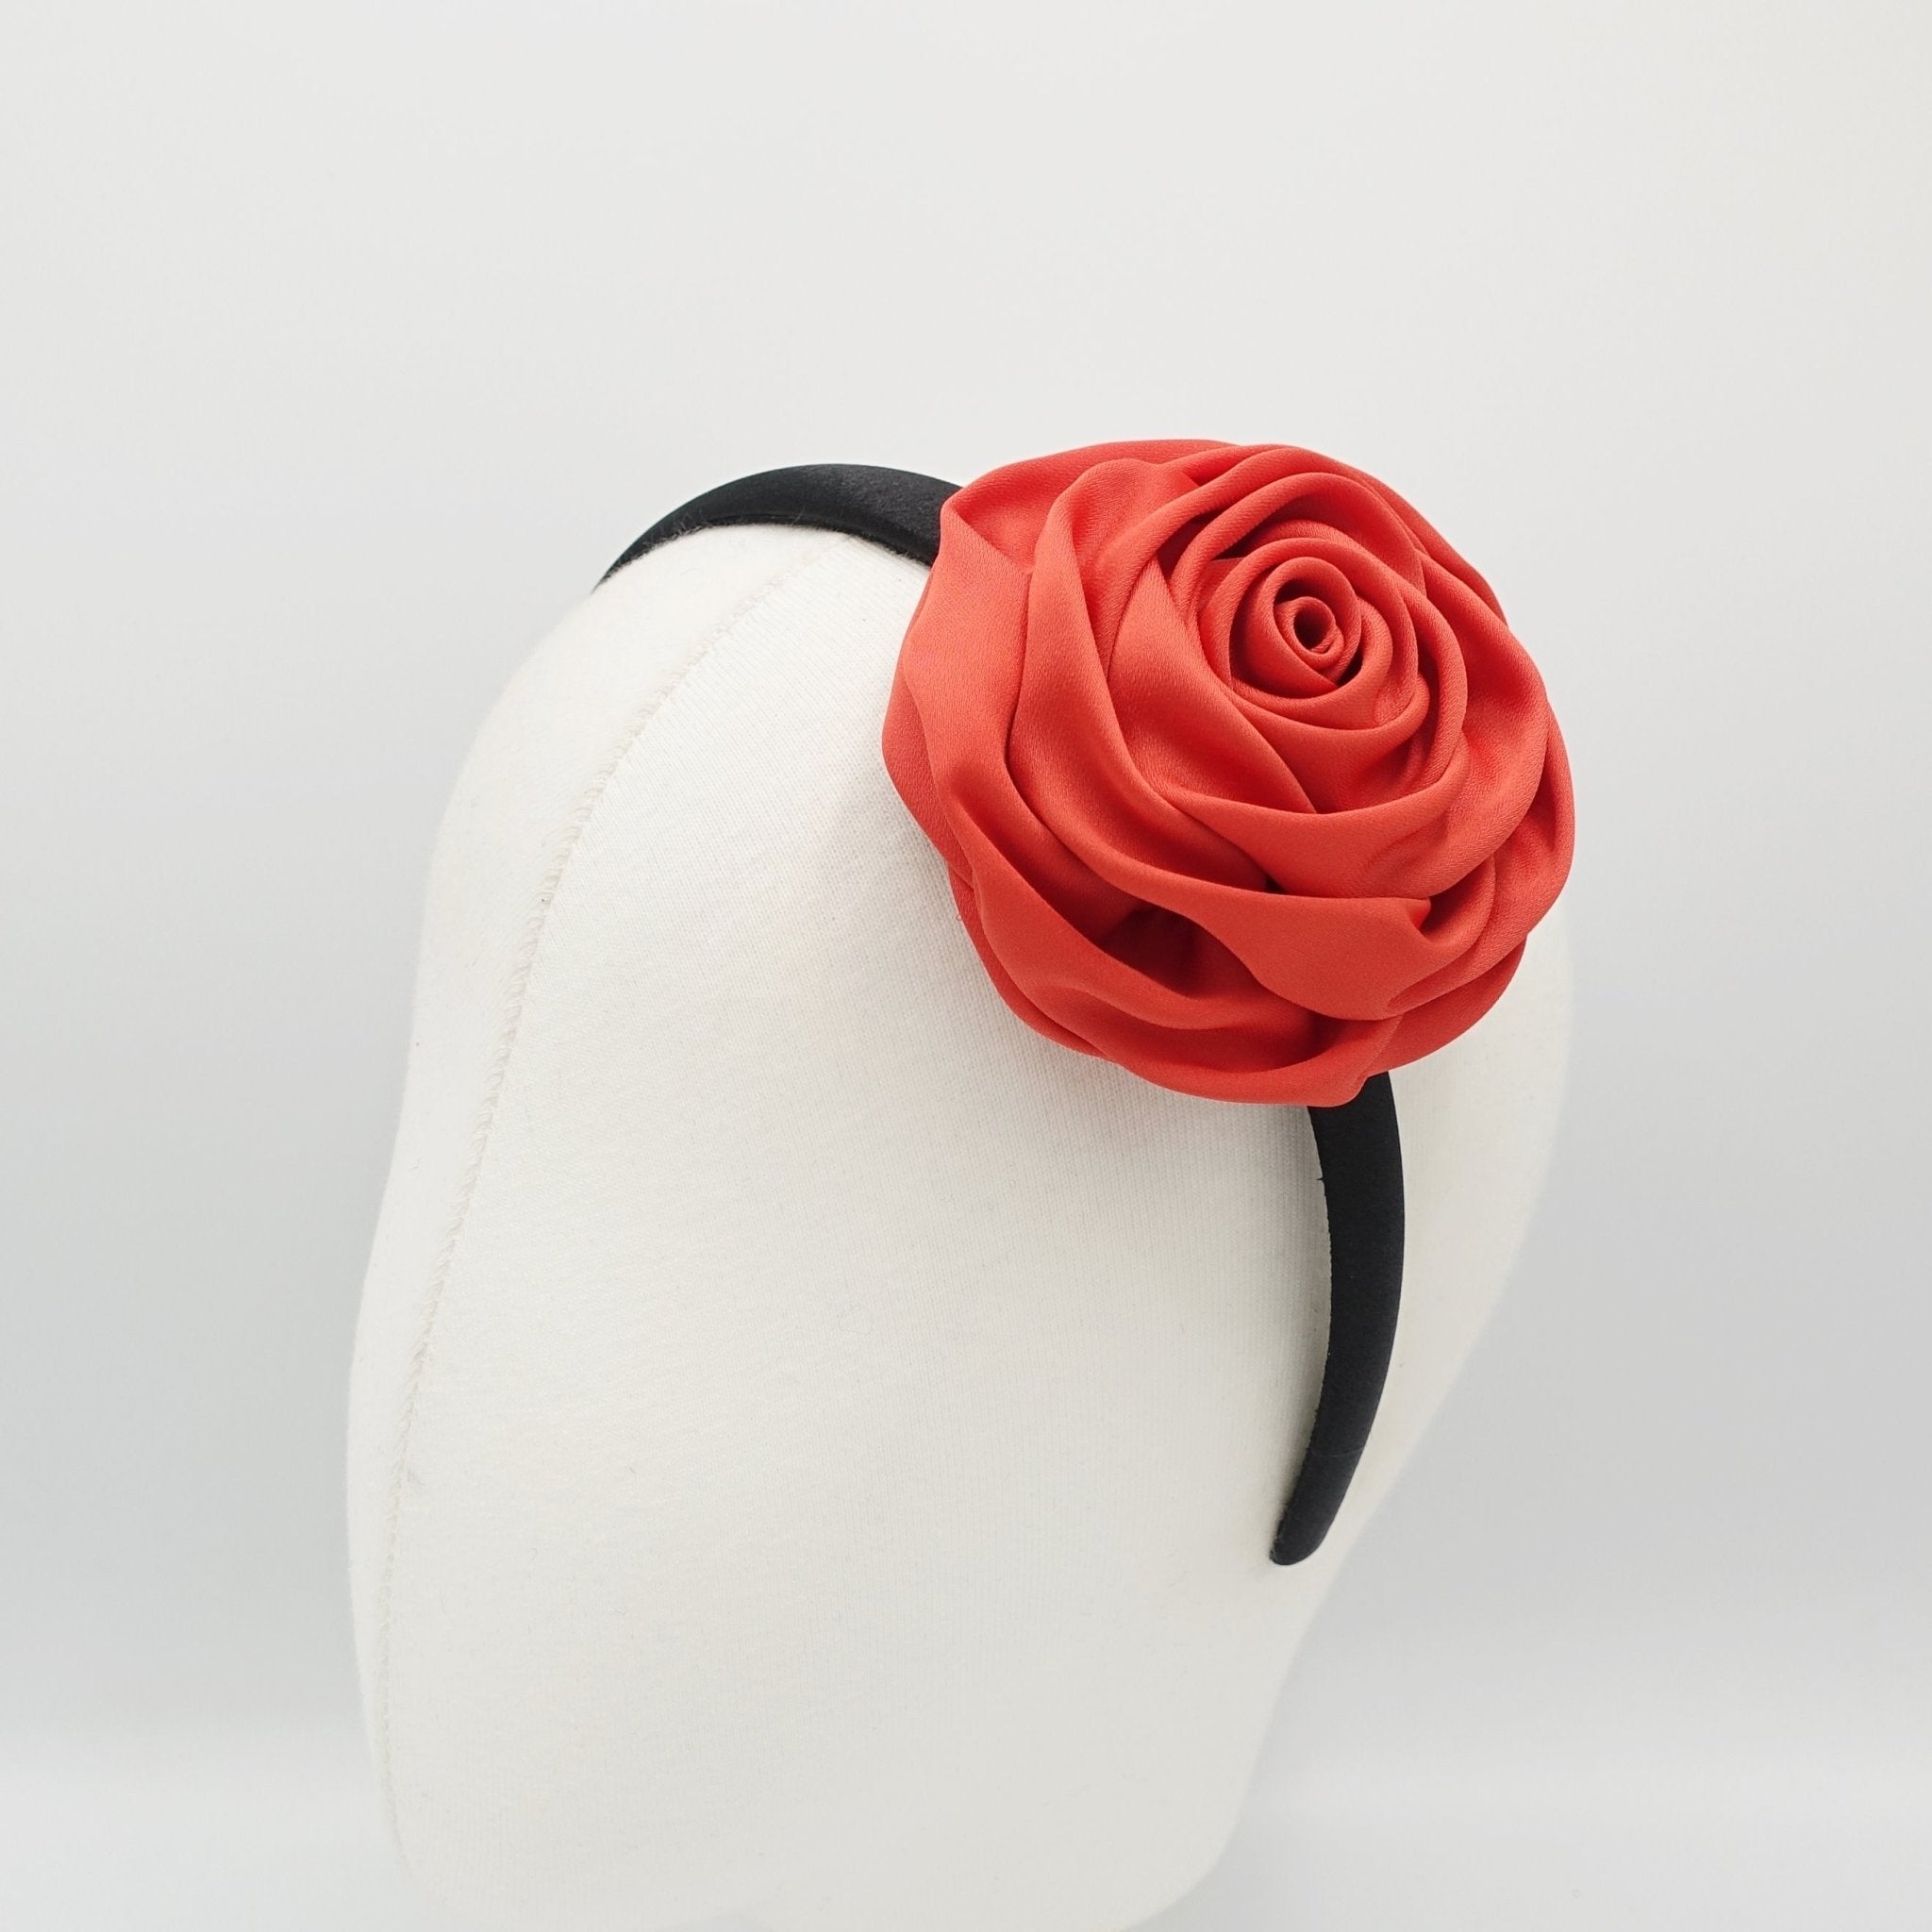 veryshine.com hairband/headband satin rose decorated black satin headband flower hairband simple women hair accessory